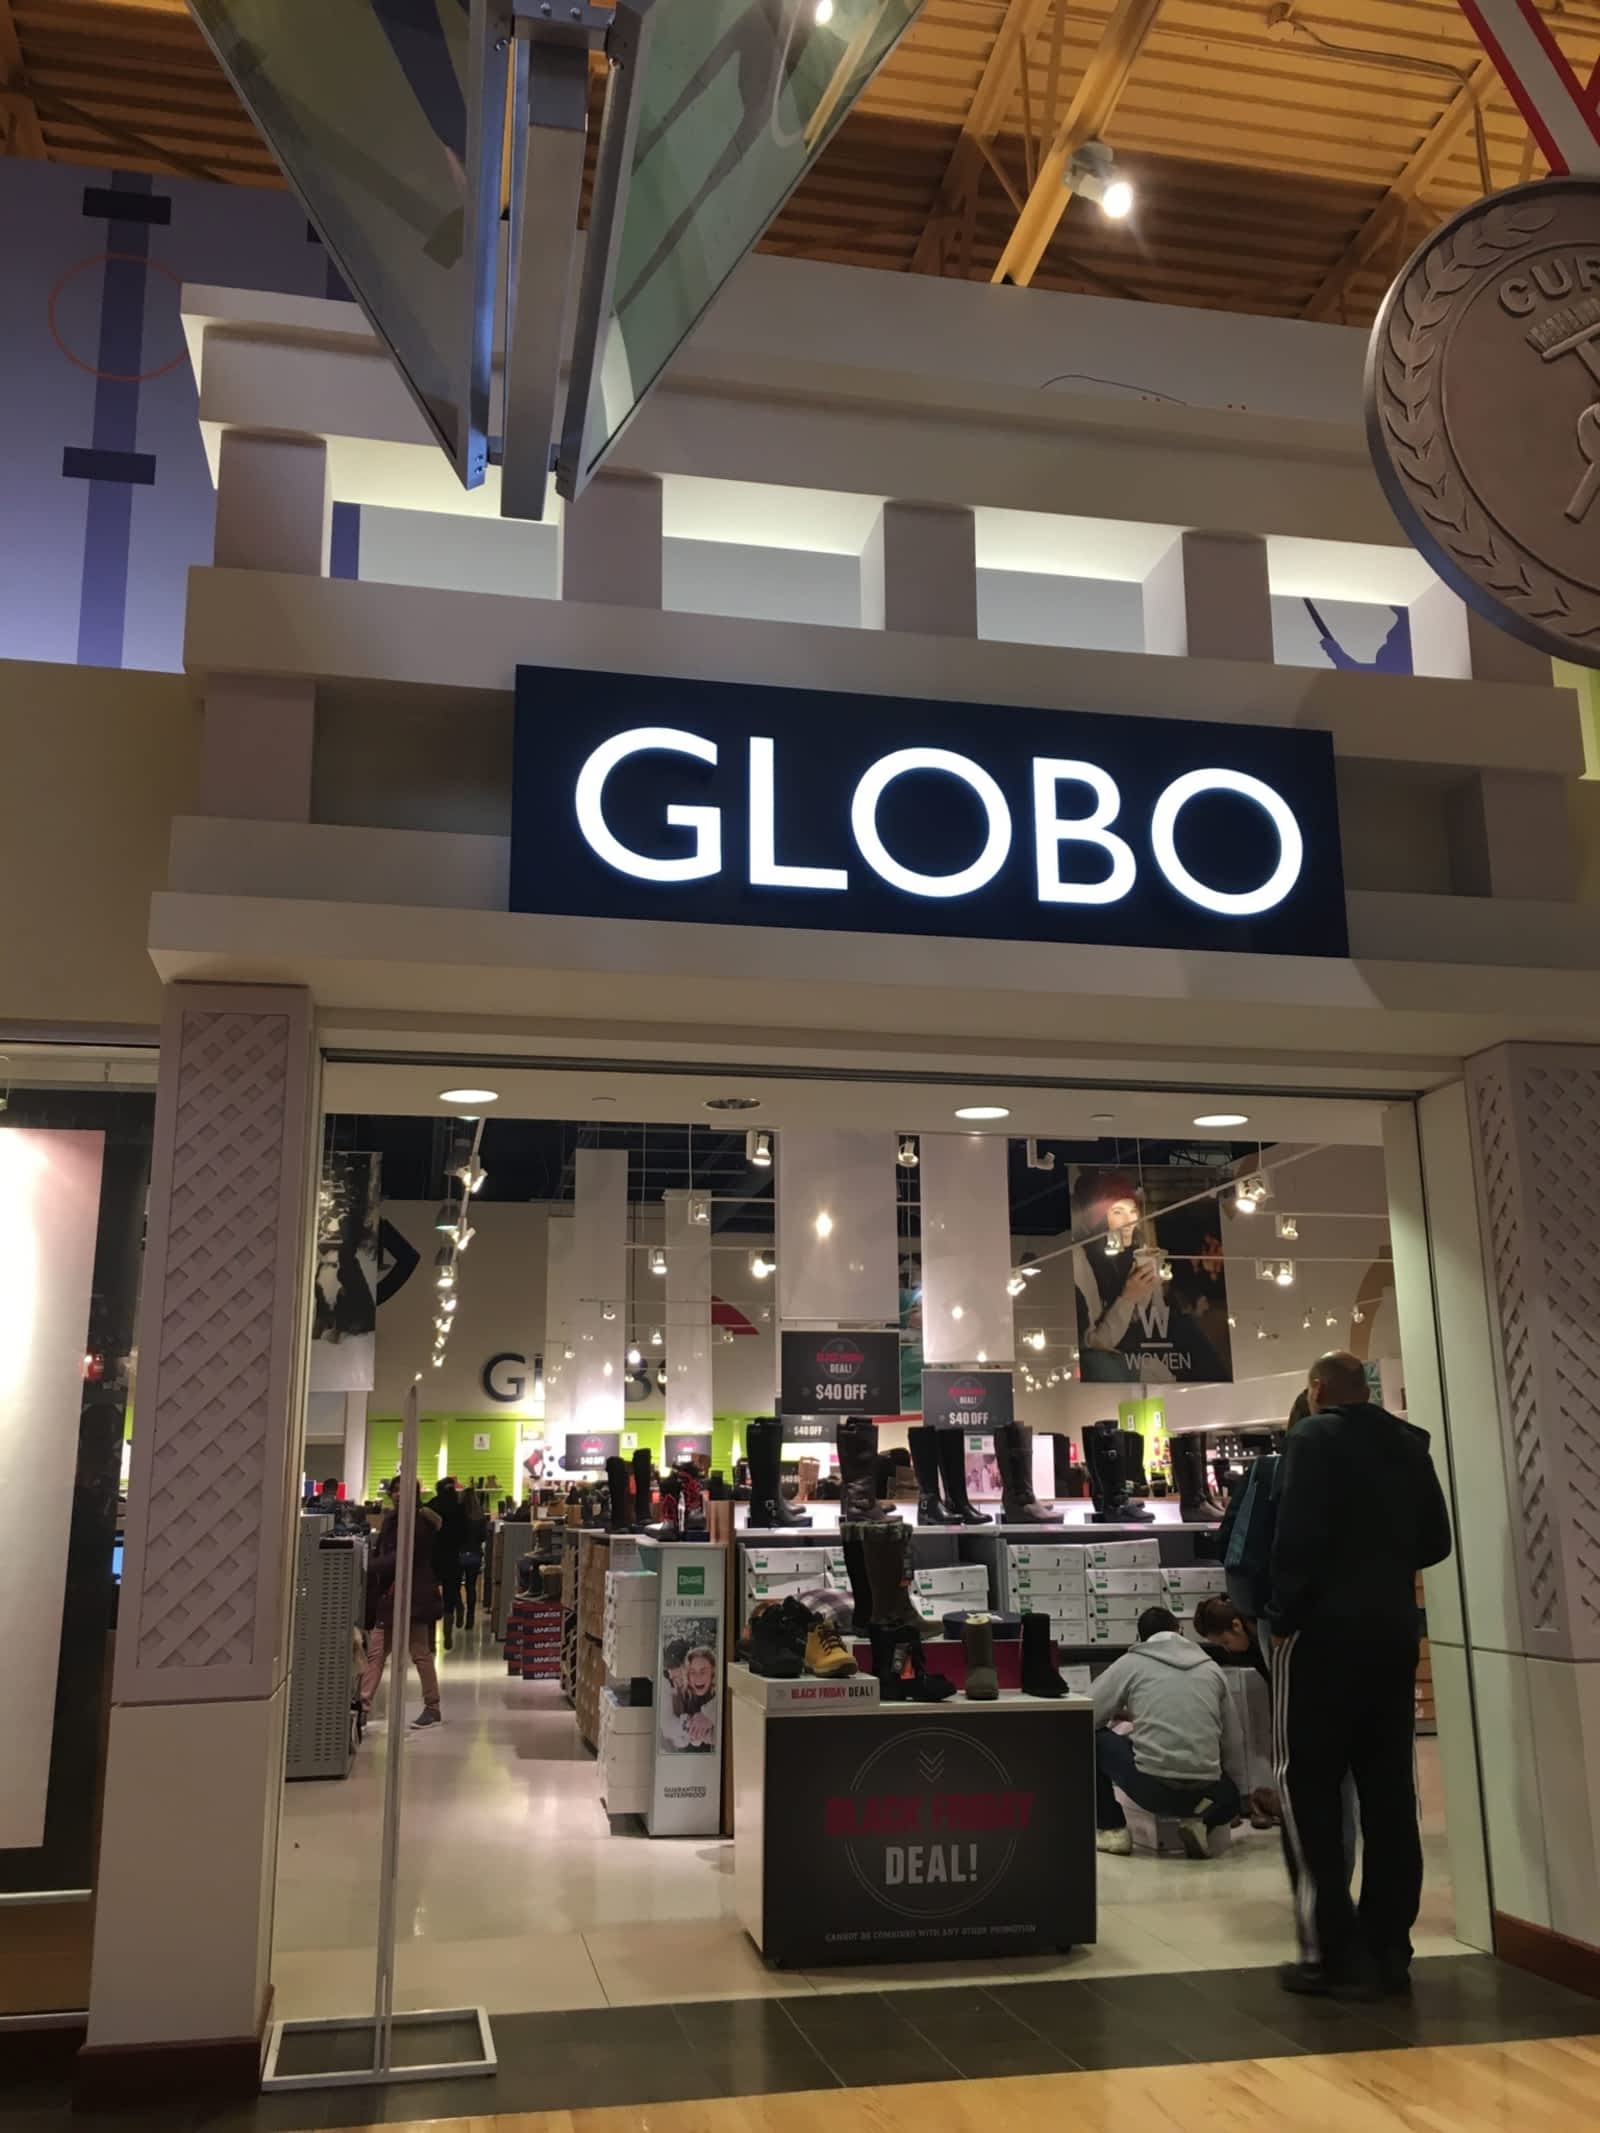 globo shoes locations near me